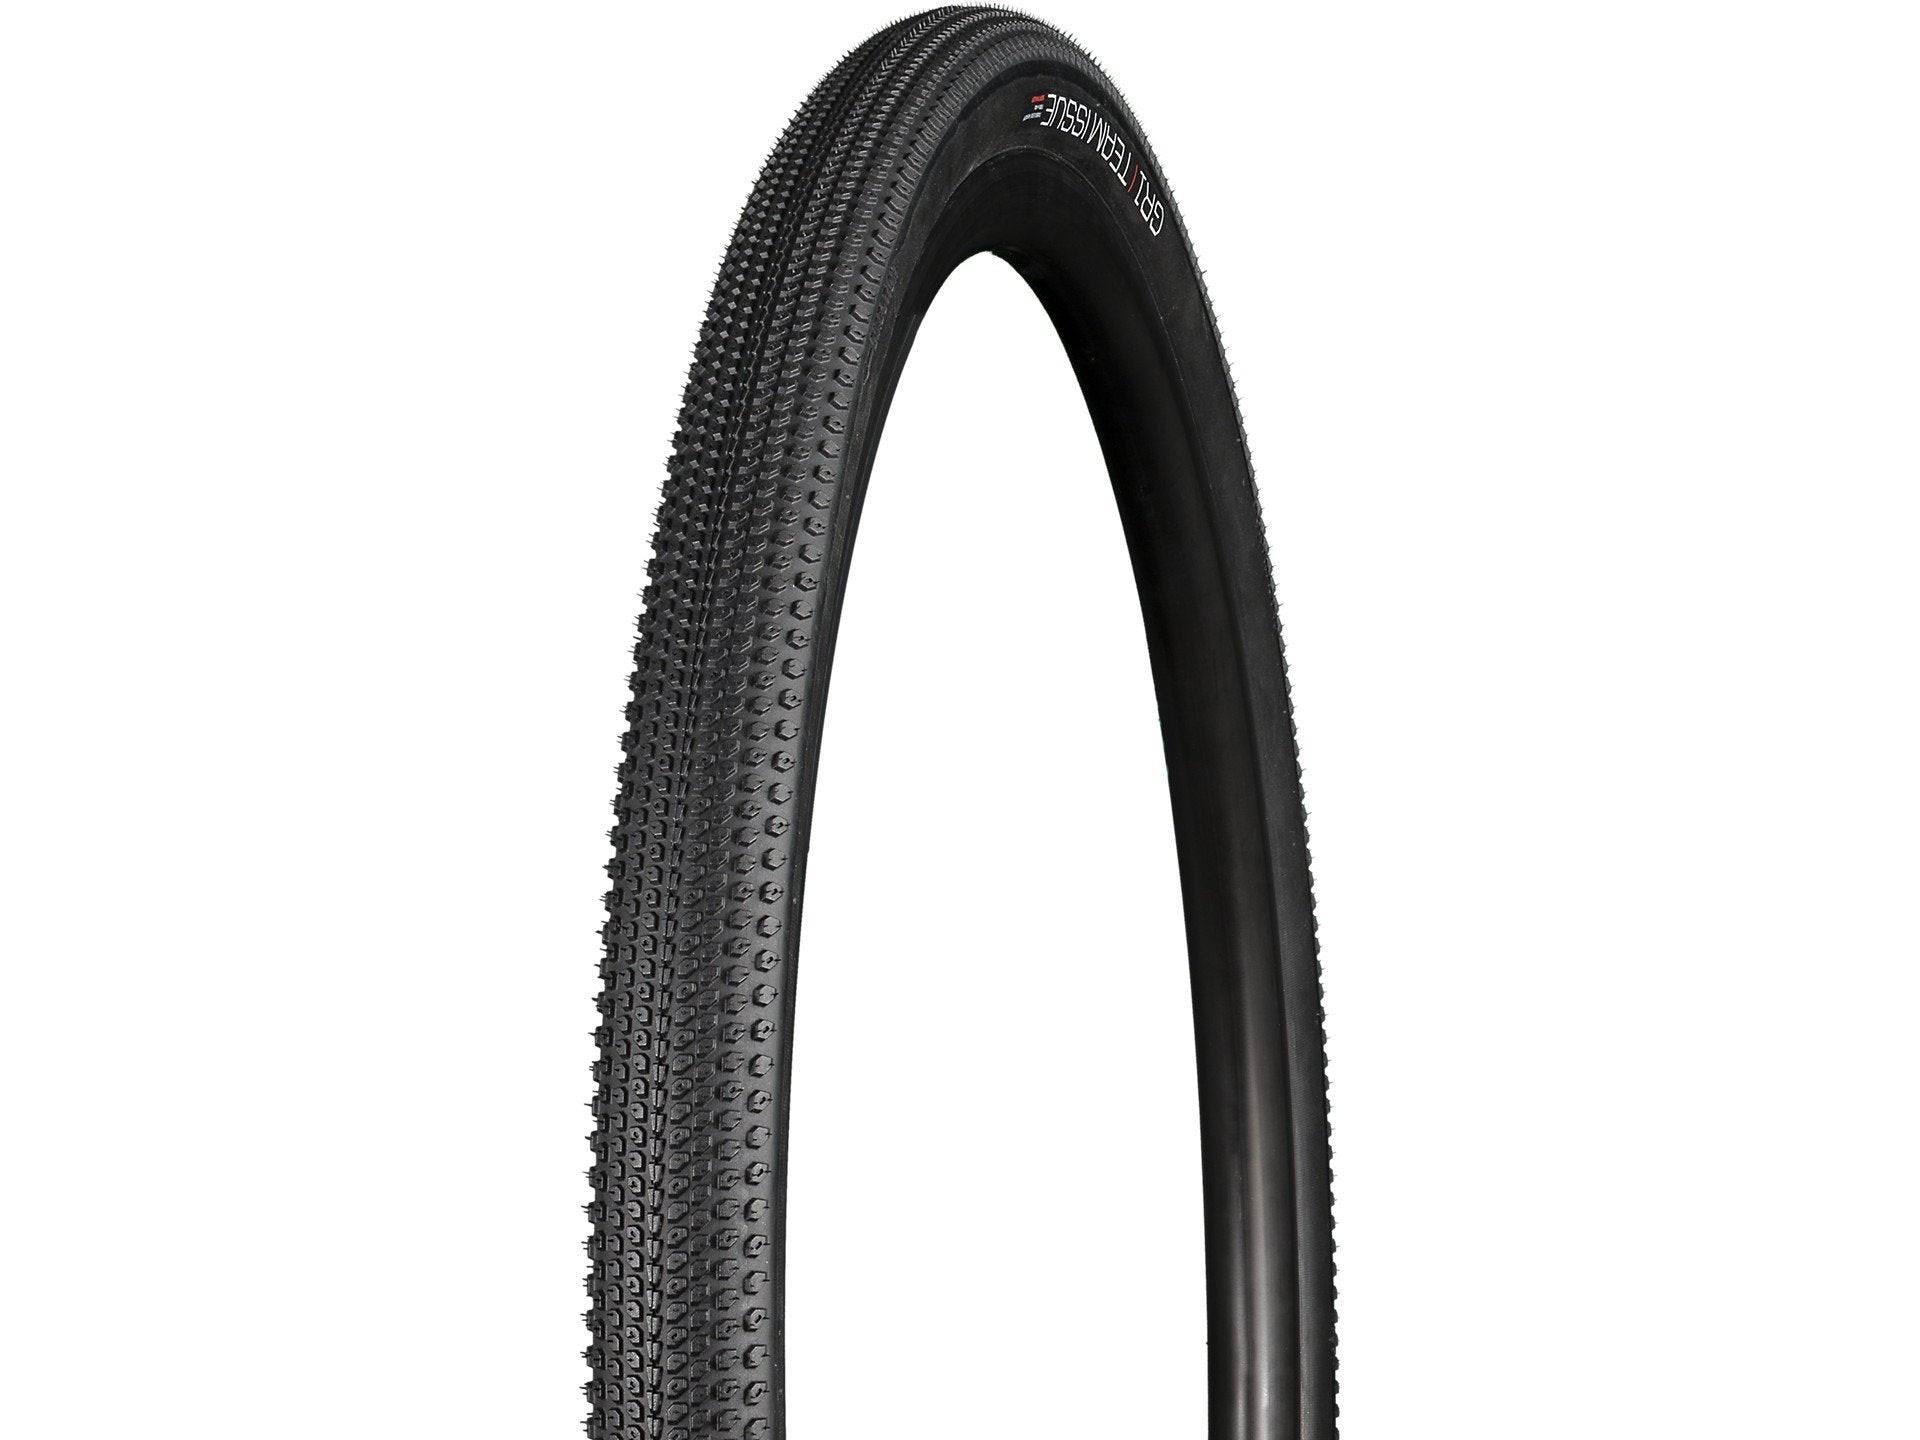 Bontrager GR1 Team Issue Tyre Colour: Black